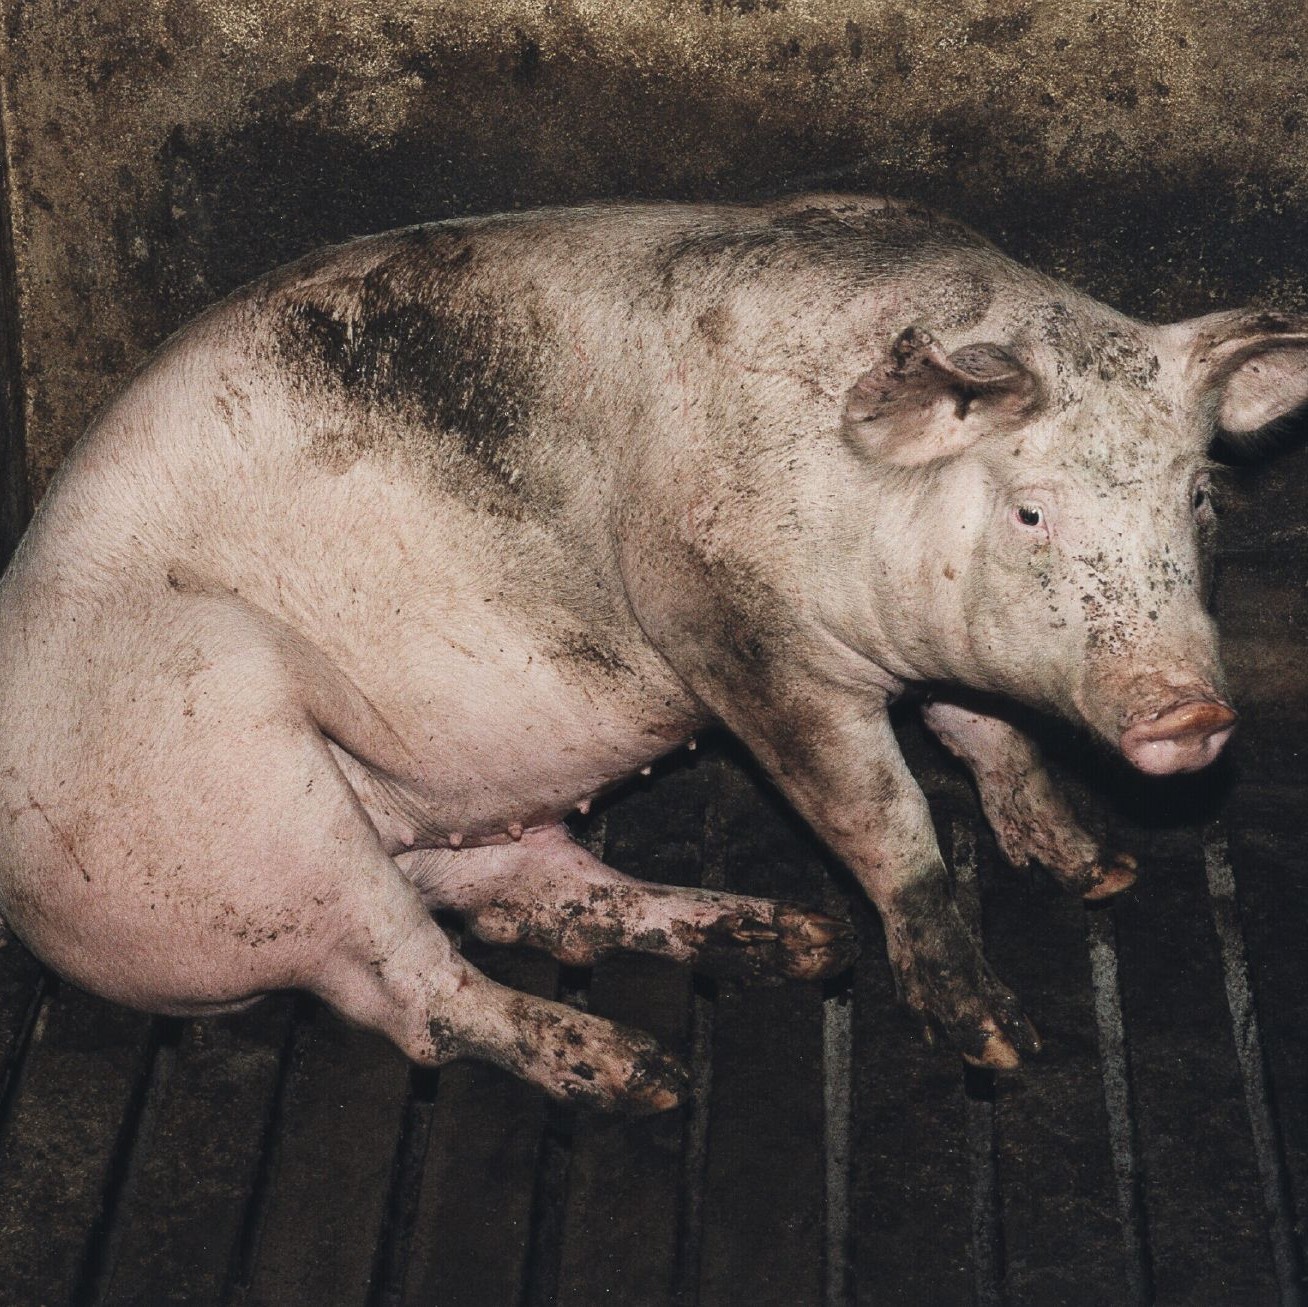 Pig on a farm with slatted floor